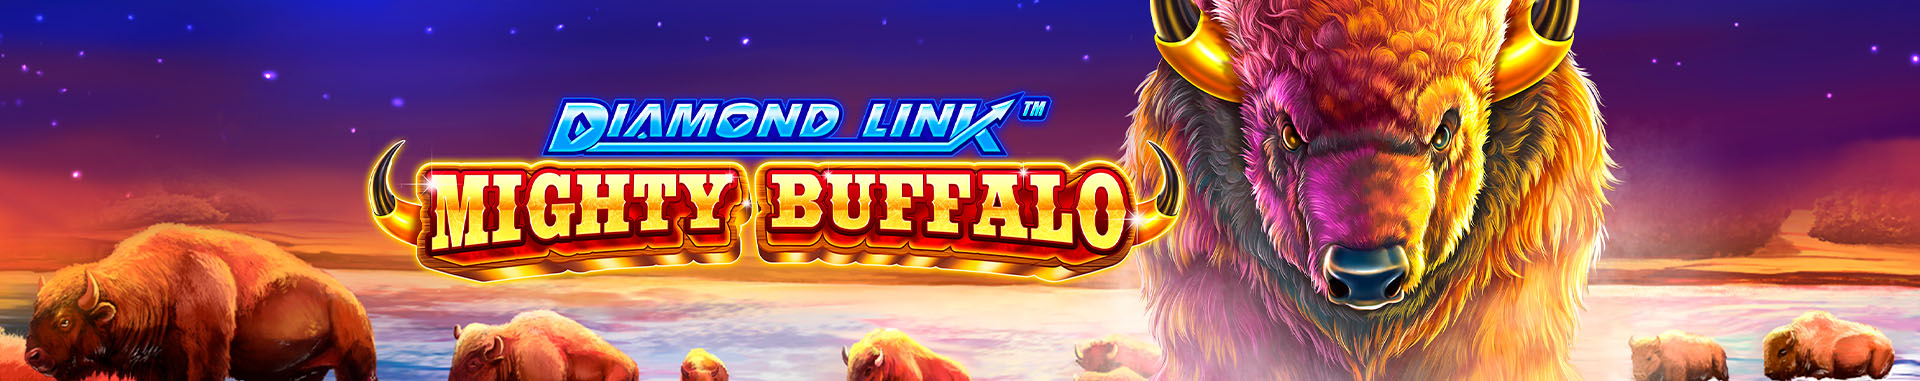 Tragaperras online Diamond Link™: Mighty Buffalo